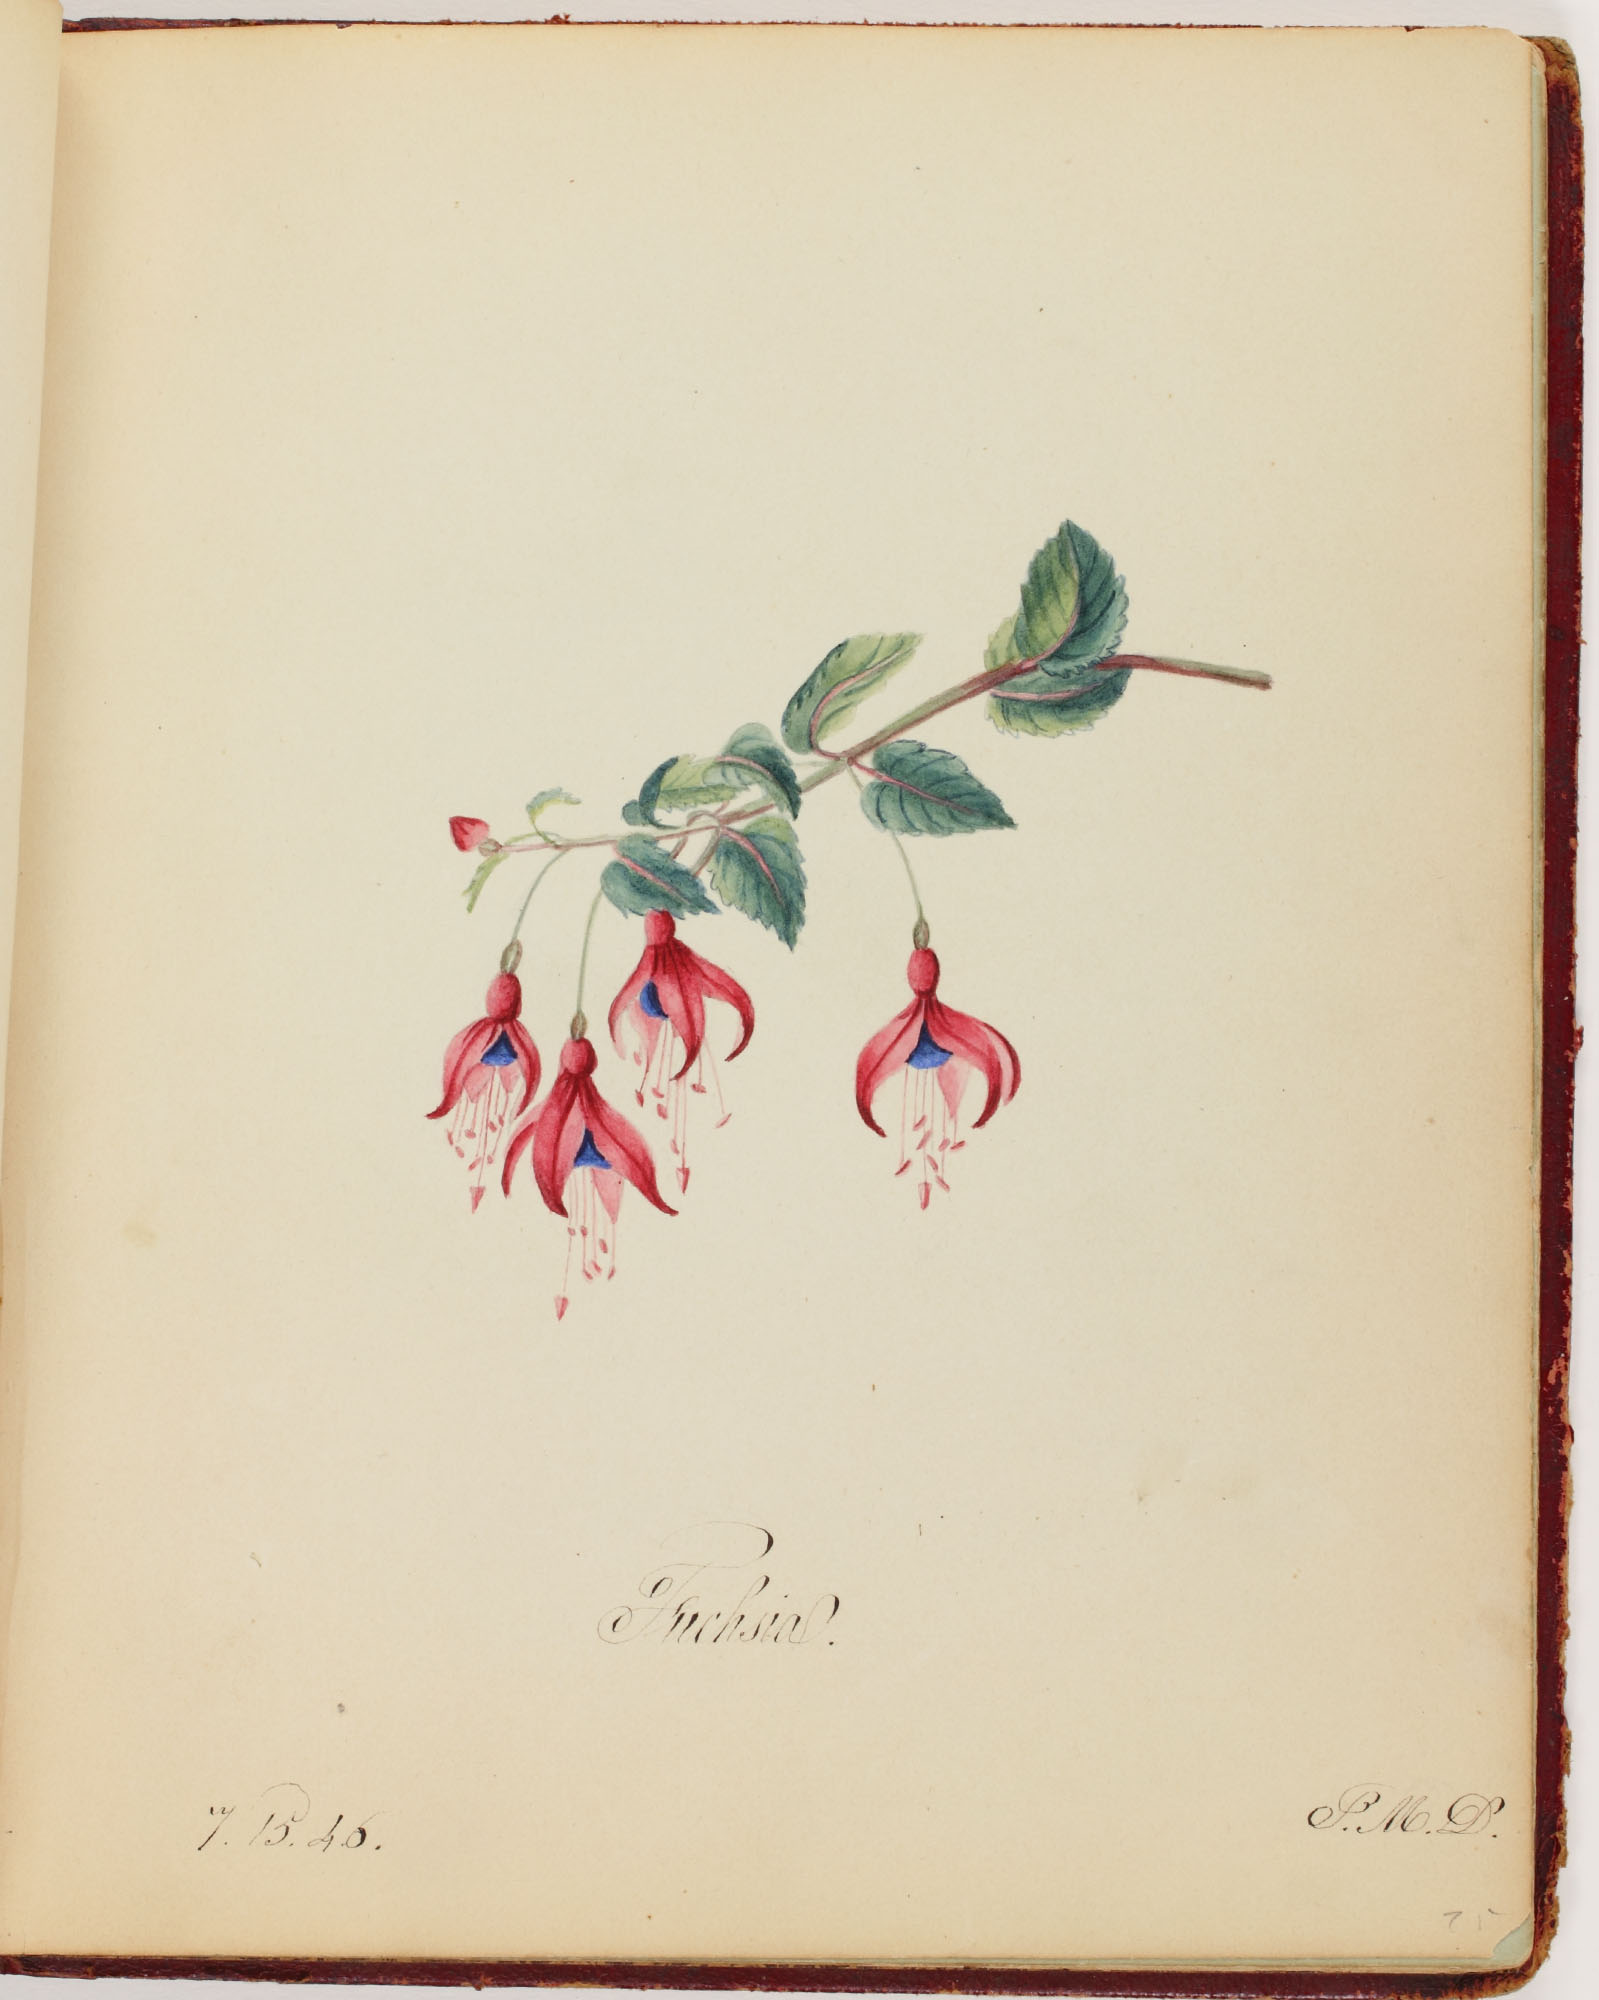 Sarah Mapps Douglass, “Fuchsia,” in Mary Anne Dickerson Album, 1833-1882. Watercolor, 1846. Library Company of Philadelphia.